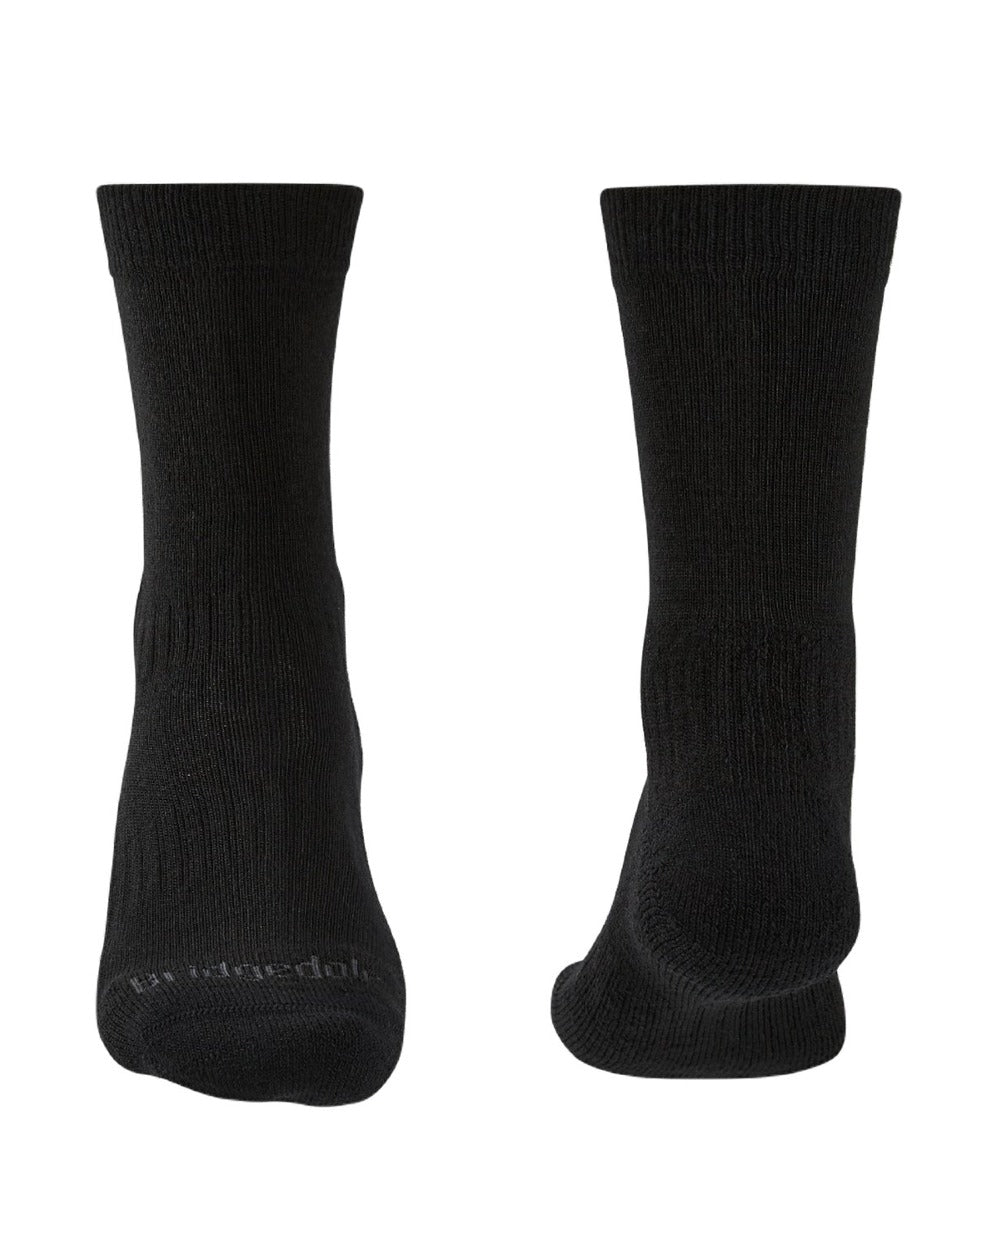 Black coloured Bridgedale Lightweight Merino Performance Boot Socks on white background 